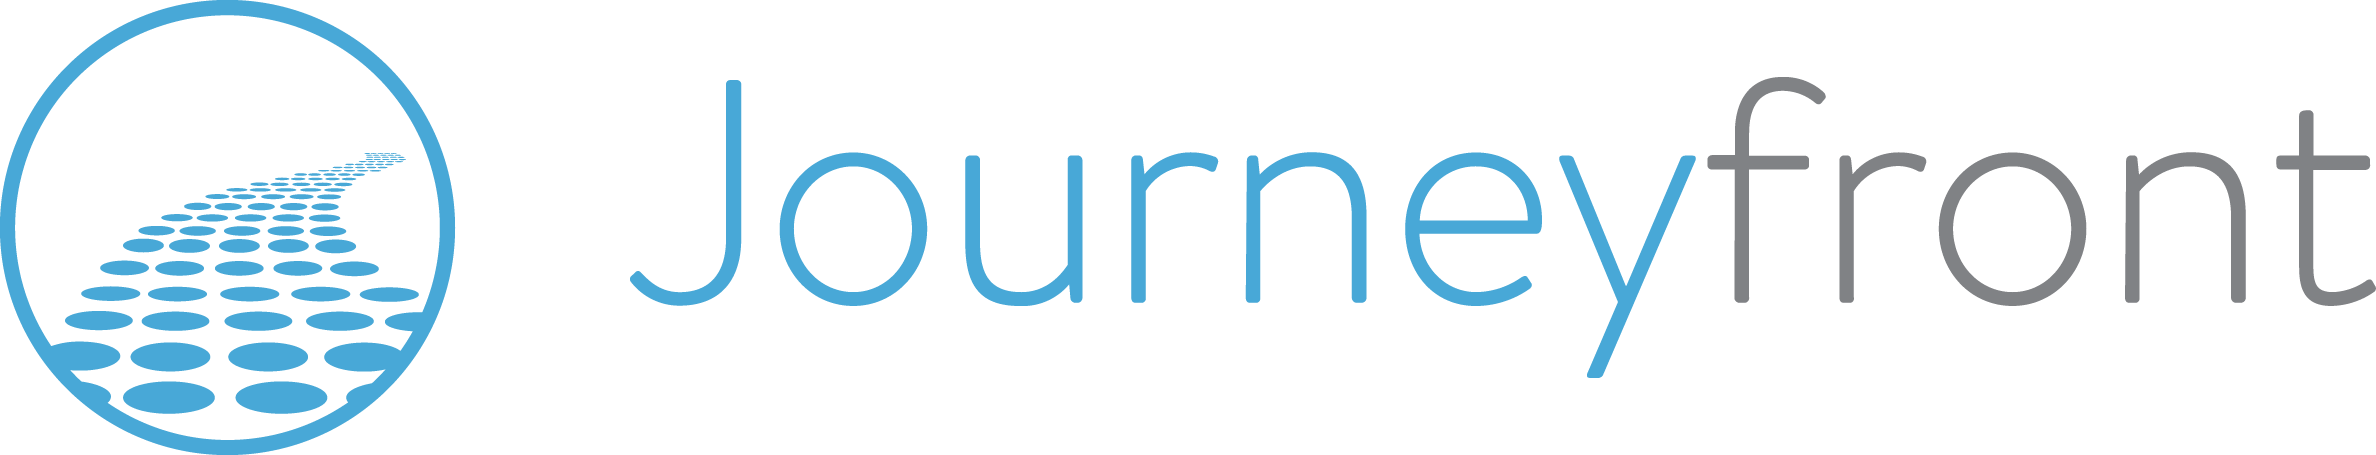 Journeyfront logo